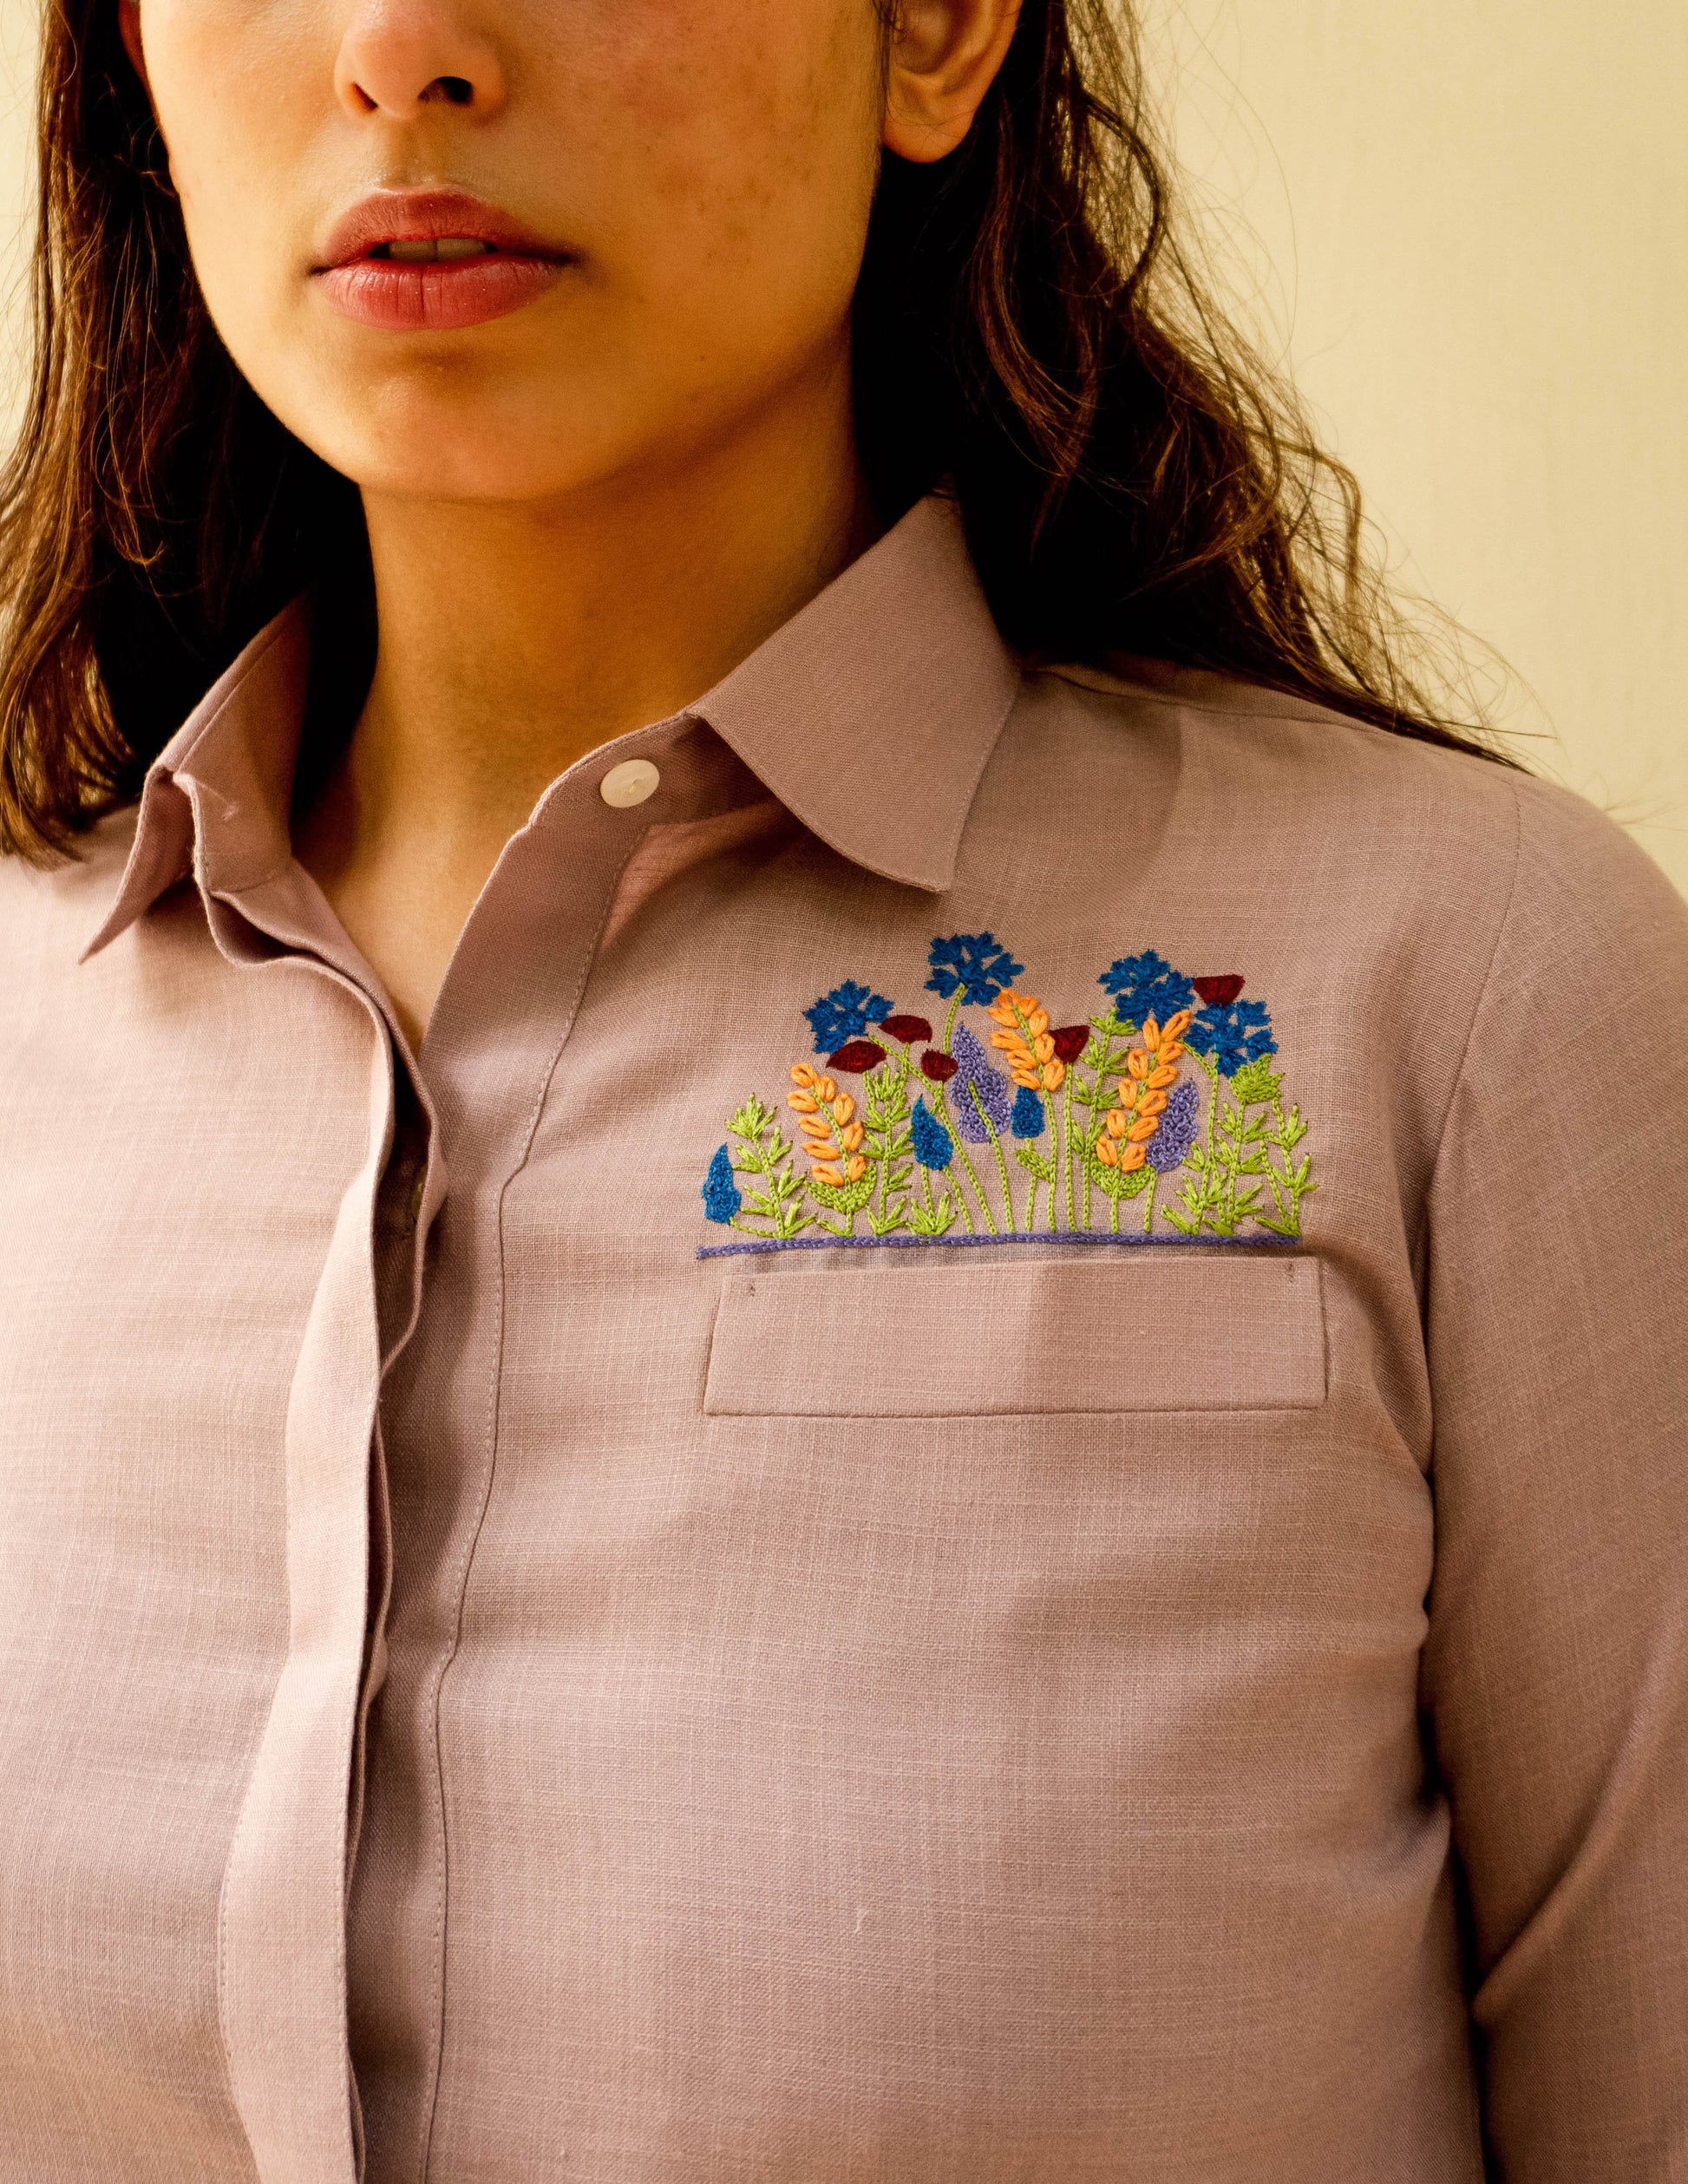 Paneni - Summer women’s clothing - Hand Embroidered shirts, 